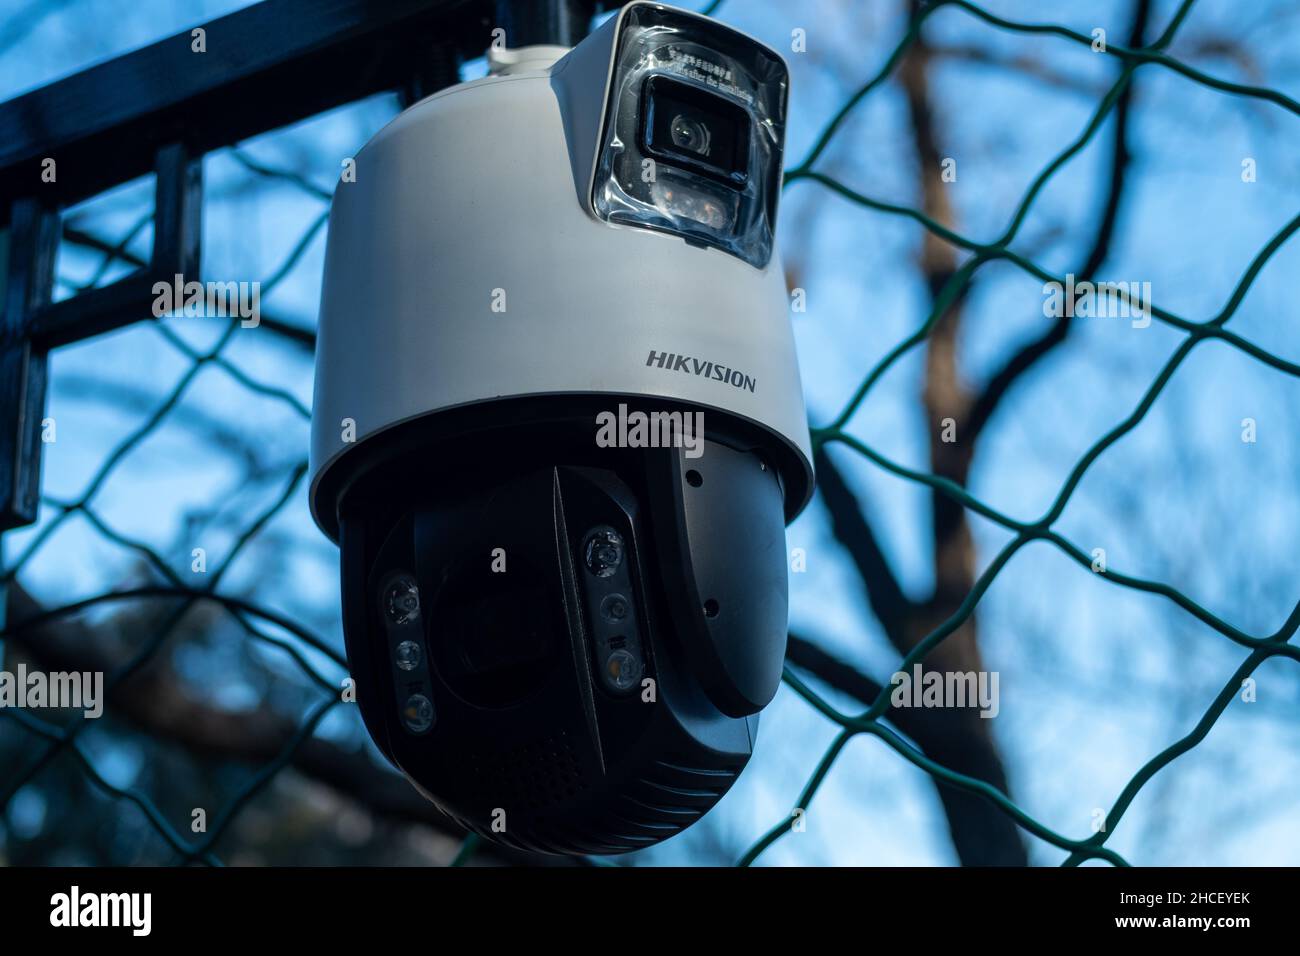 La cámara CCTV (Hikvision) se ve en Beijing, China. Foto de stock